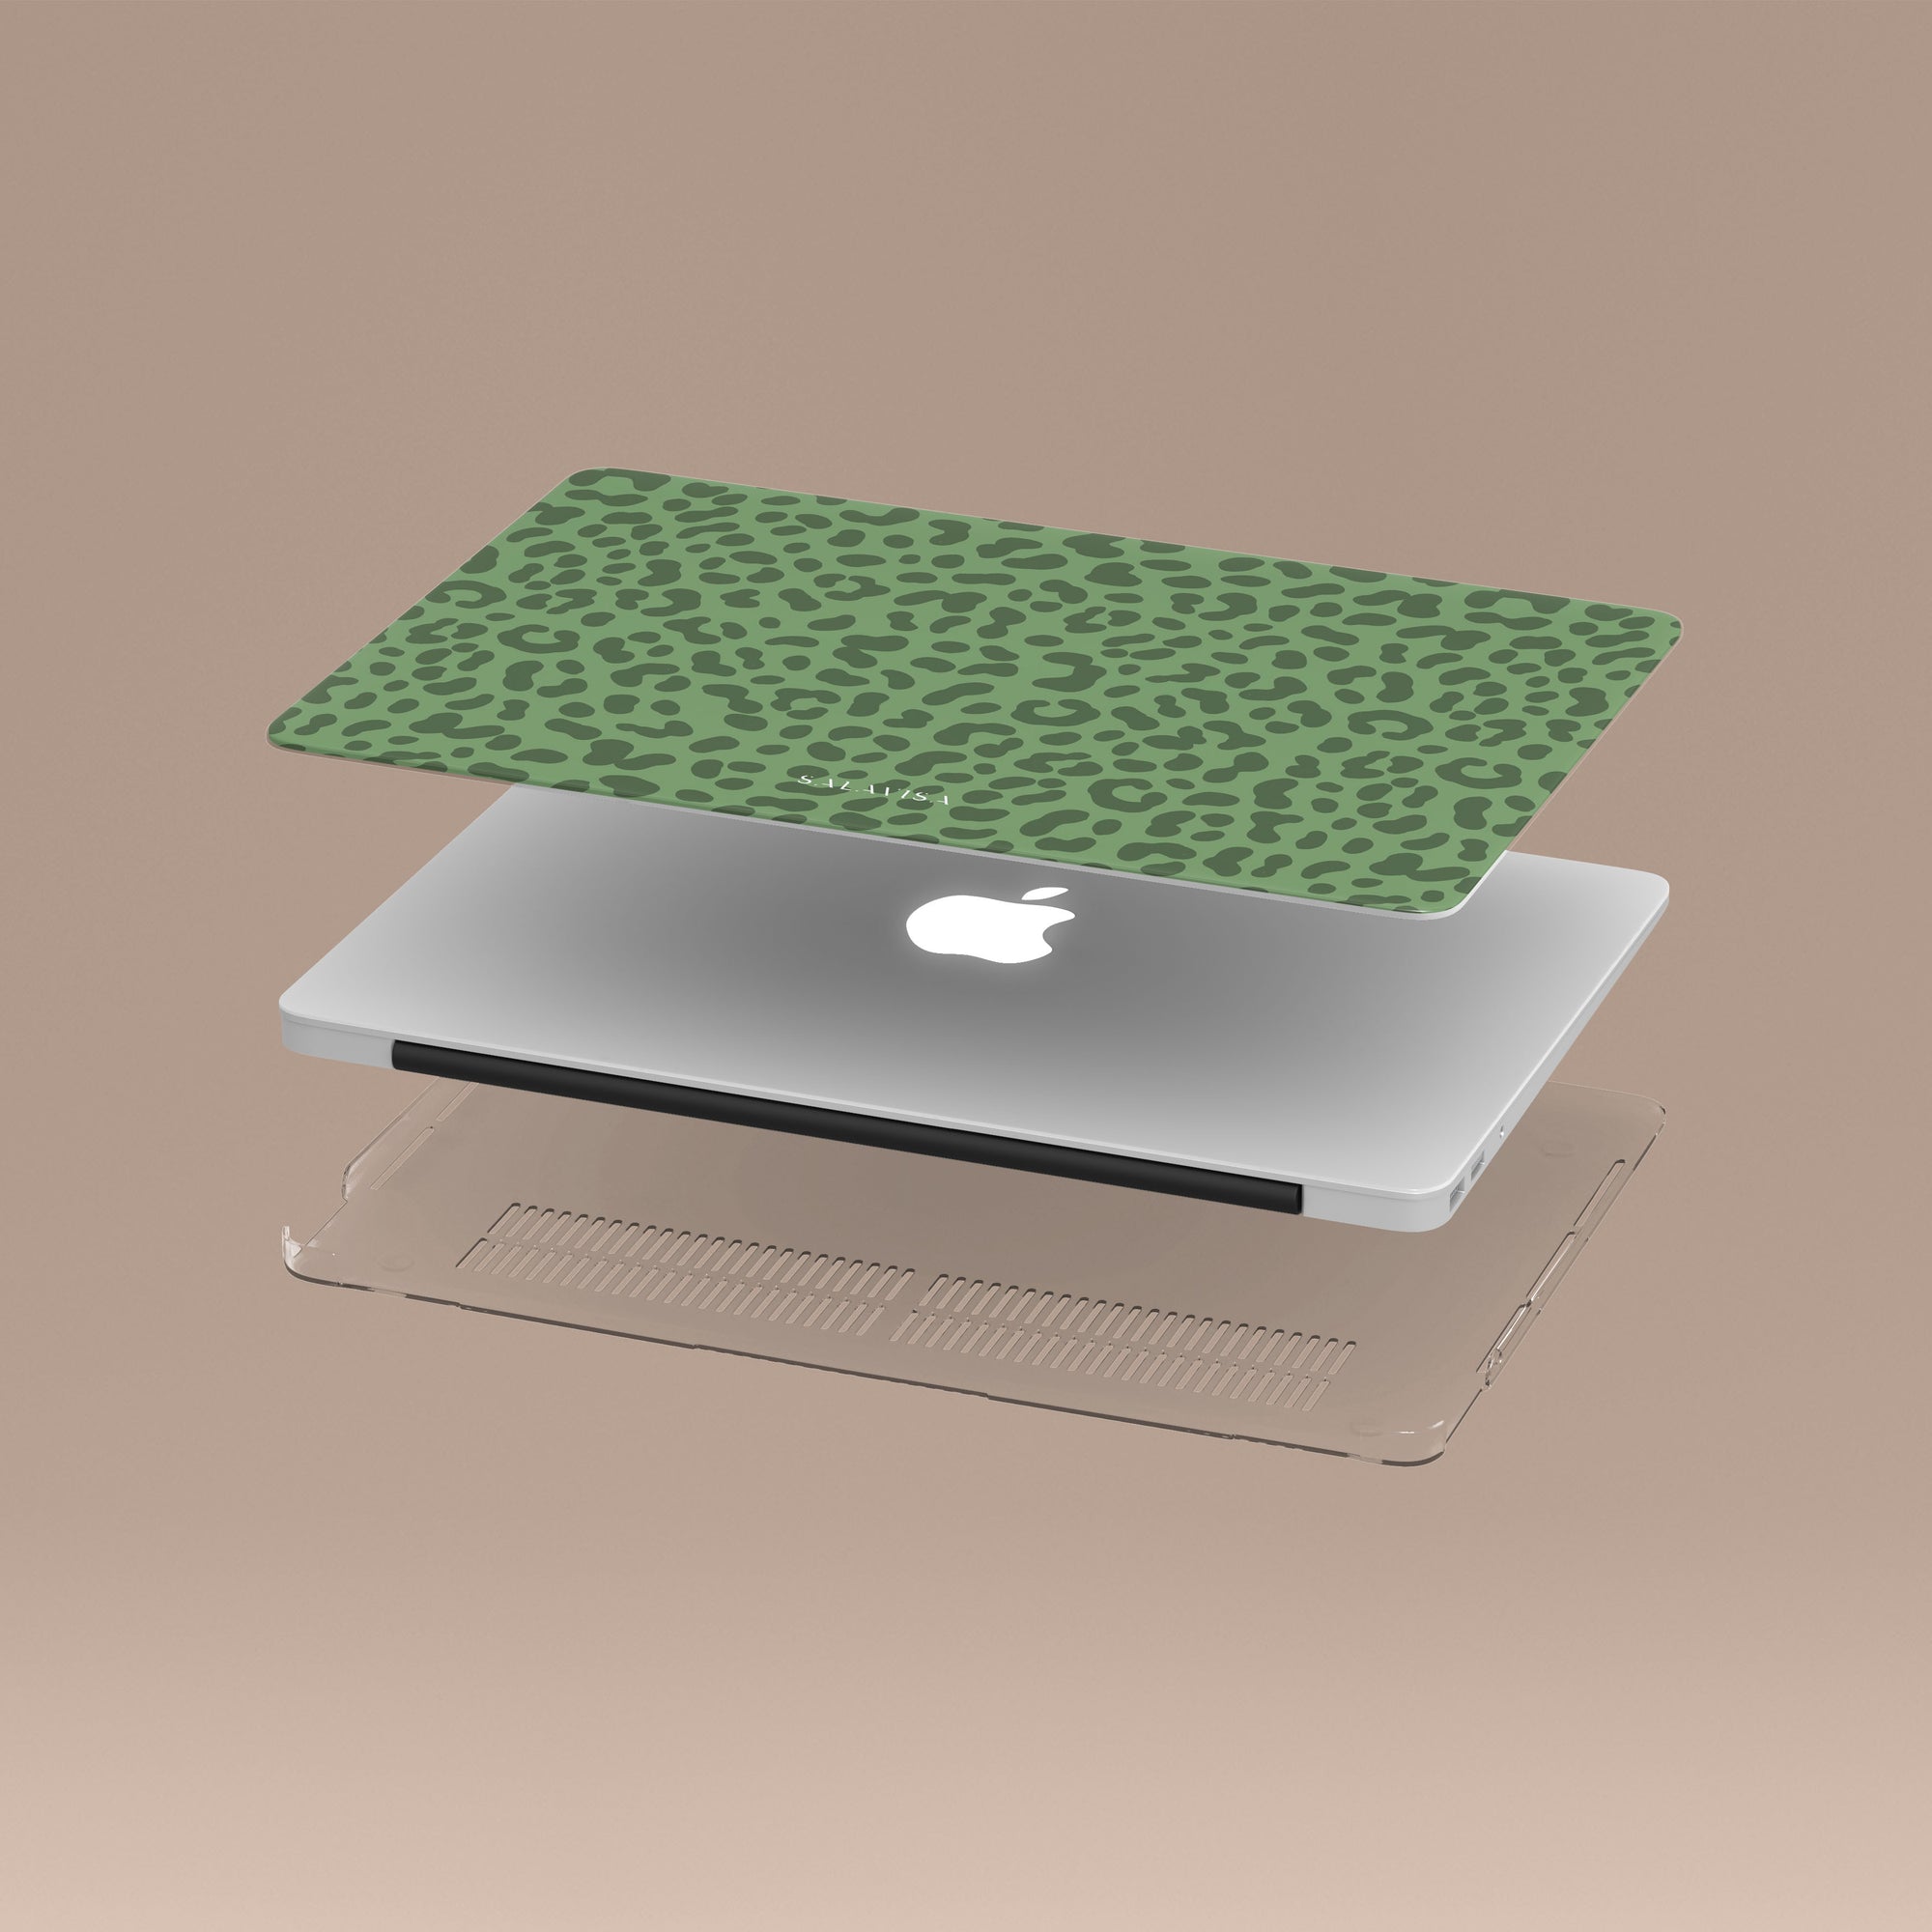 Green Tiger Paws MacBook Case MacBook Cases - SALAVISA